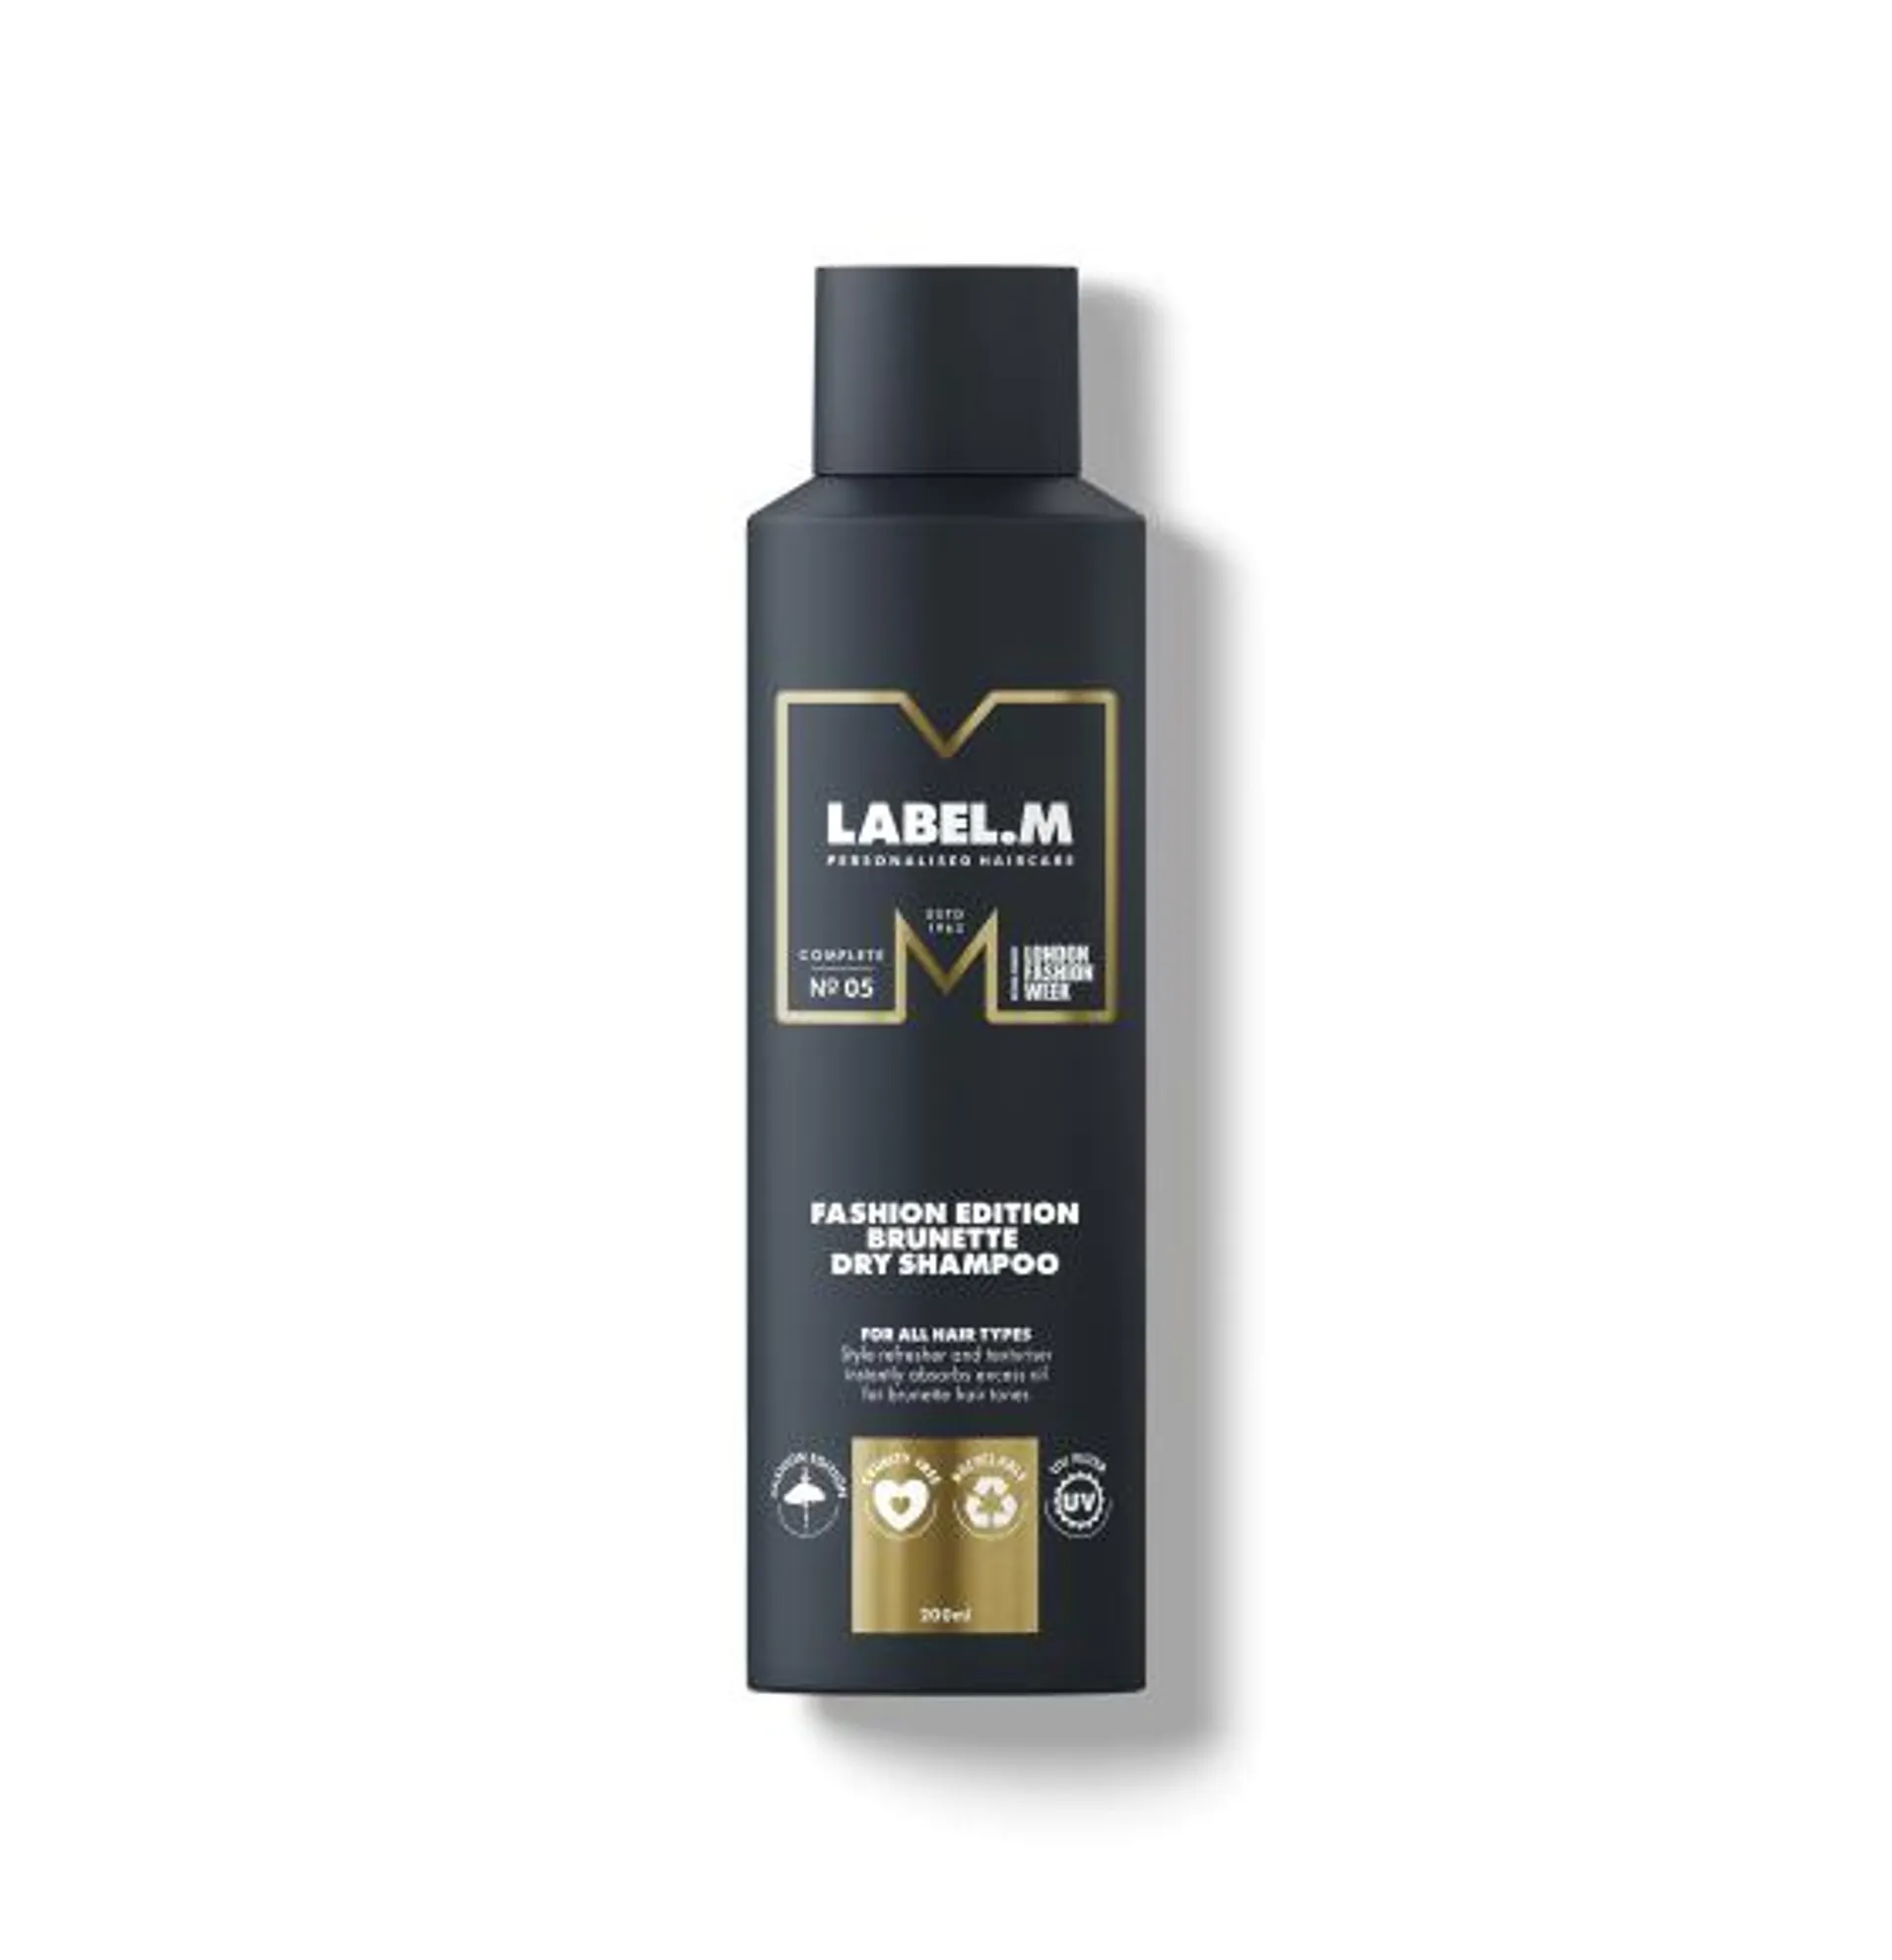 LABEL.M Fashion Edition Brunette Dry Shampoo